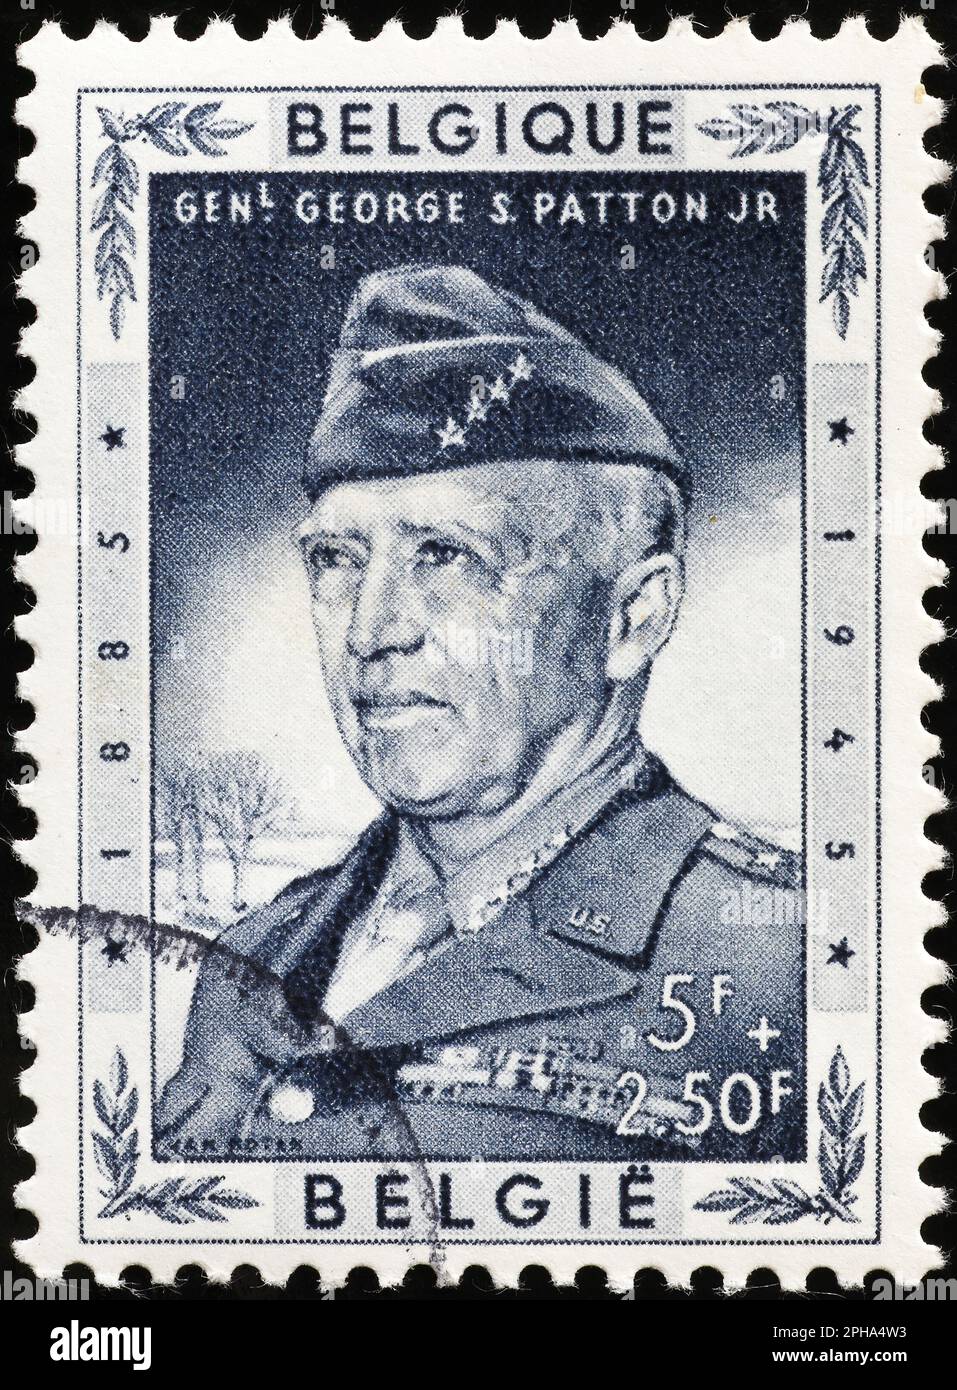 Gen. George Patton portrait on old belgian stamp Stock Photo